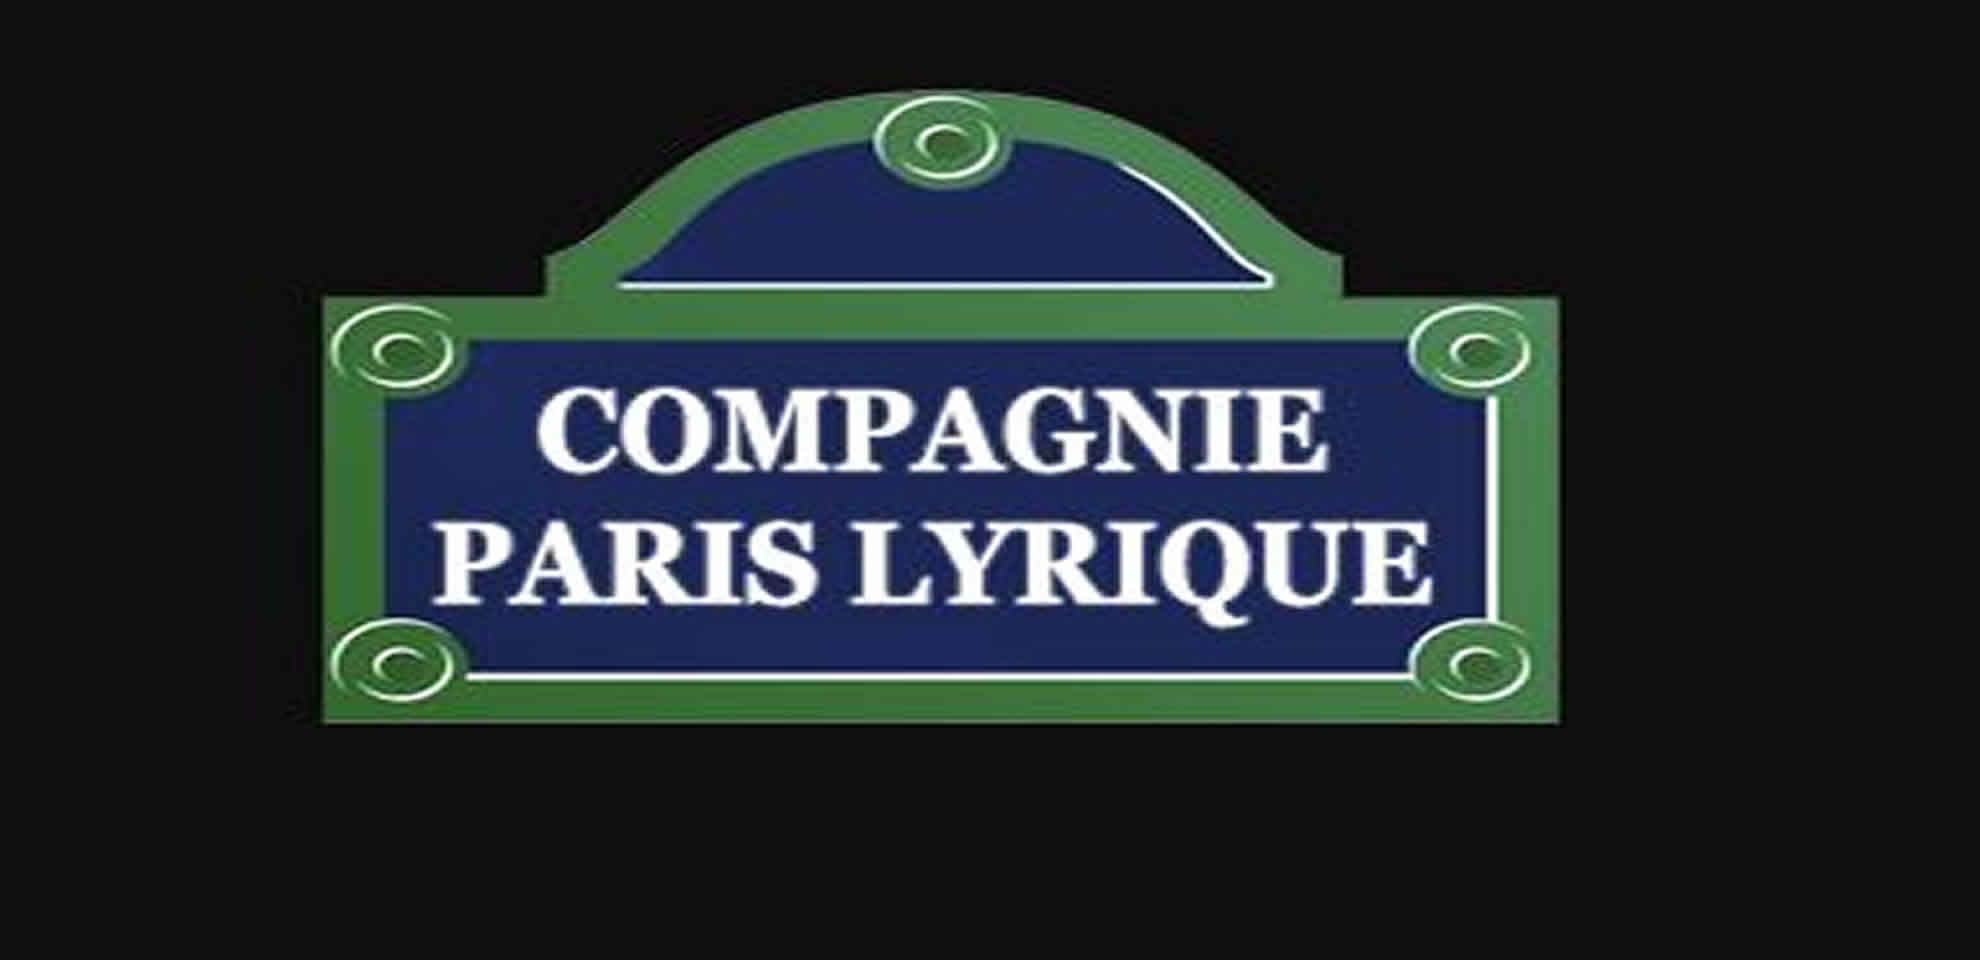 La Compagnie Paris Lyrique